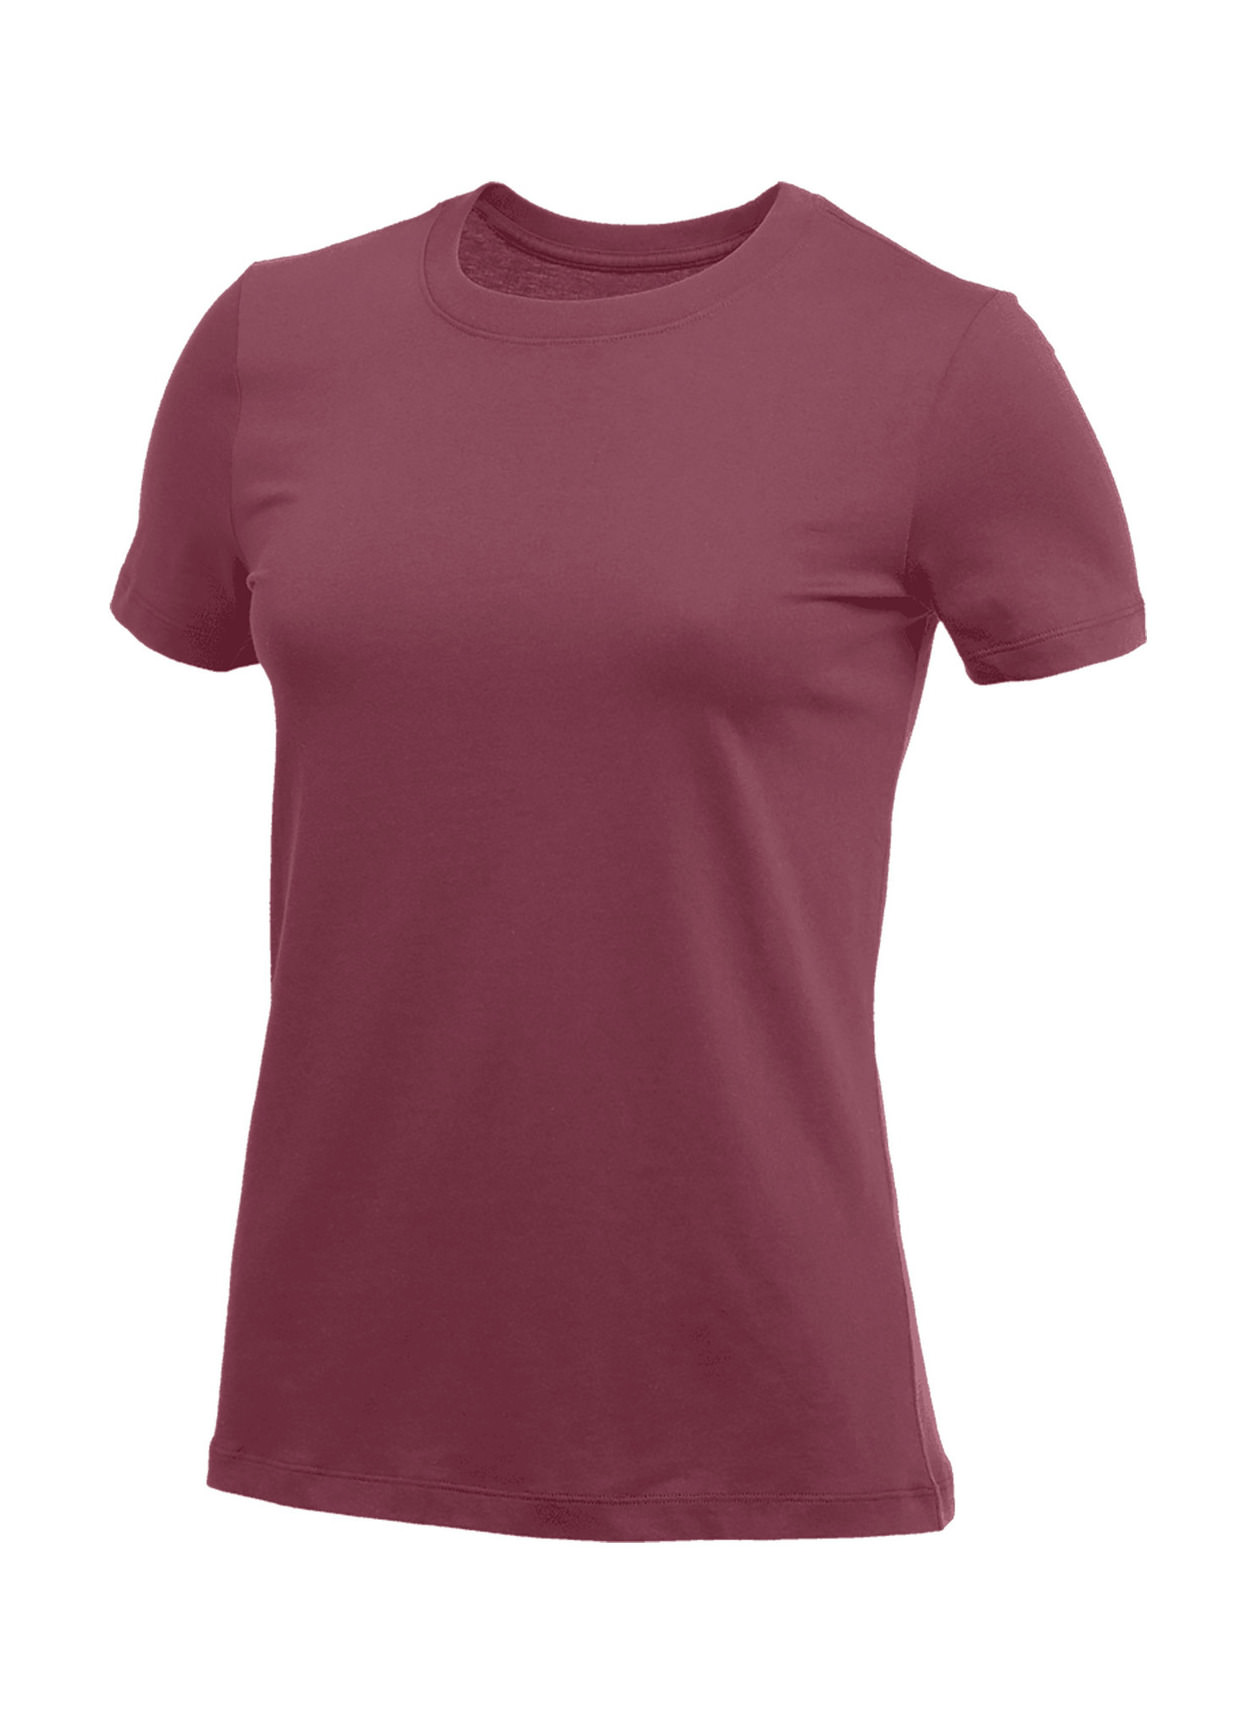 Nike Women's Deep Maroon T-Shirt